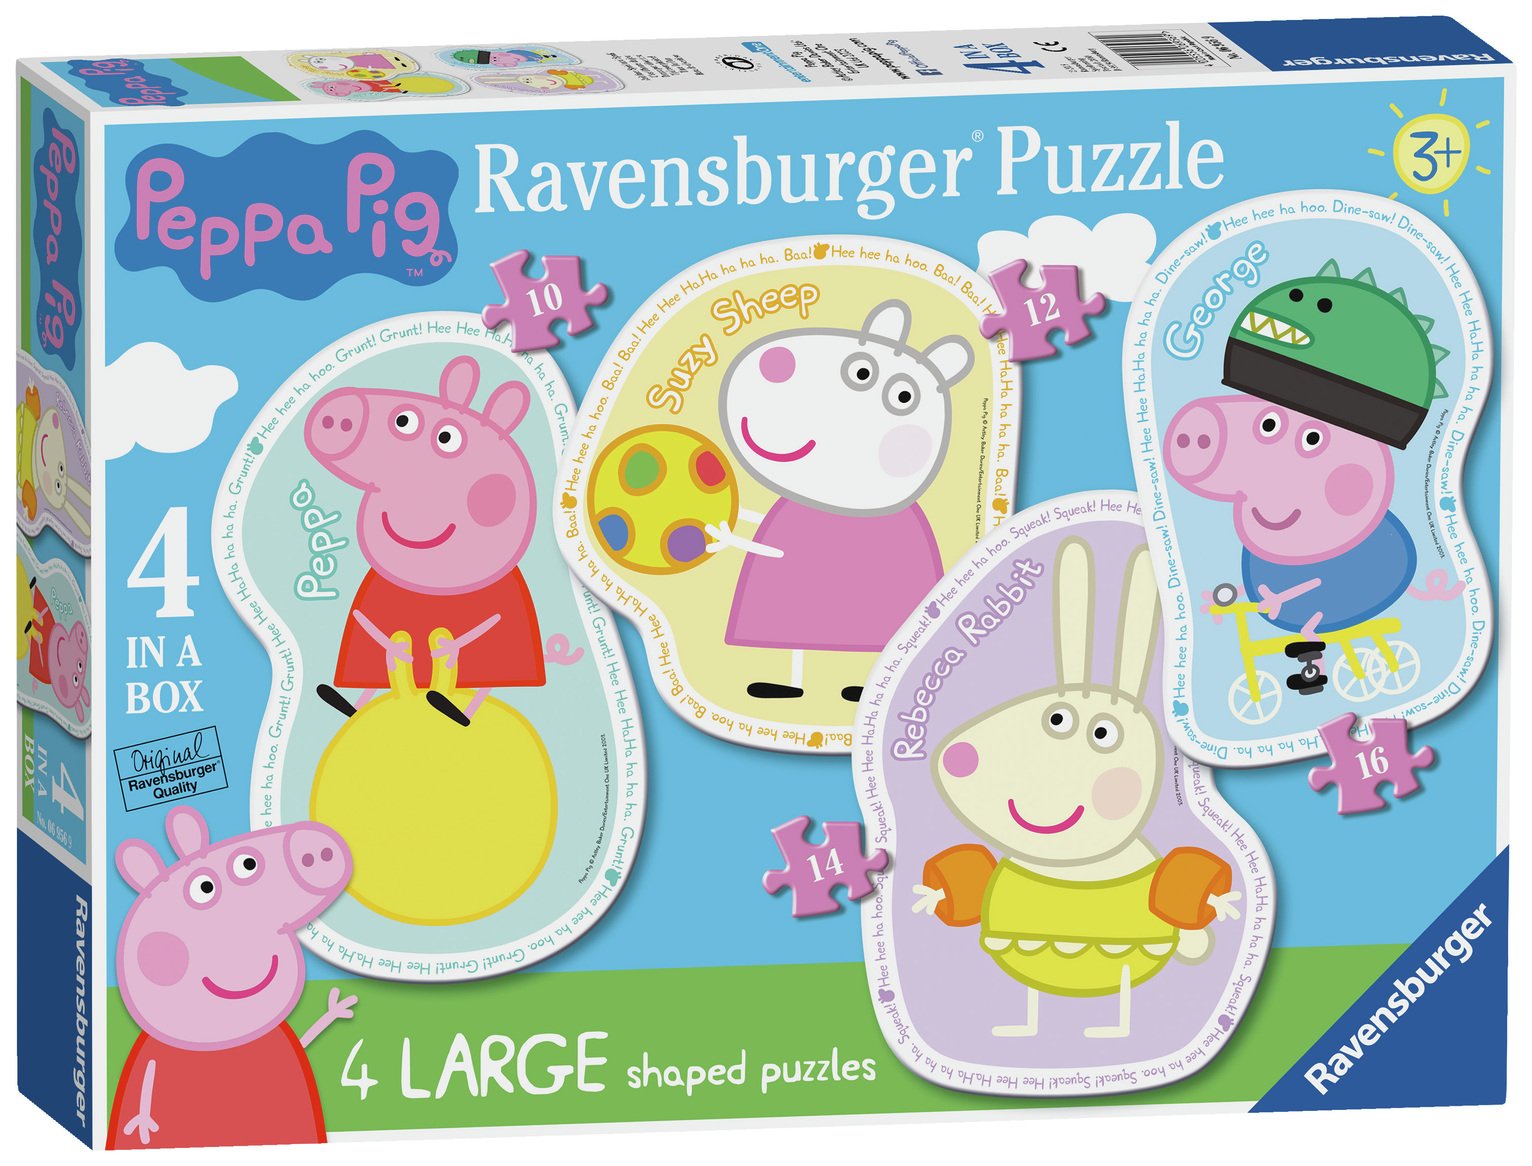 Ravensburger Peppa Pig 4 Large Shaped Jigsaw Puzzles